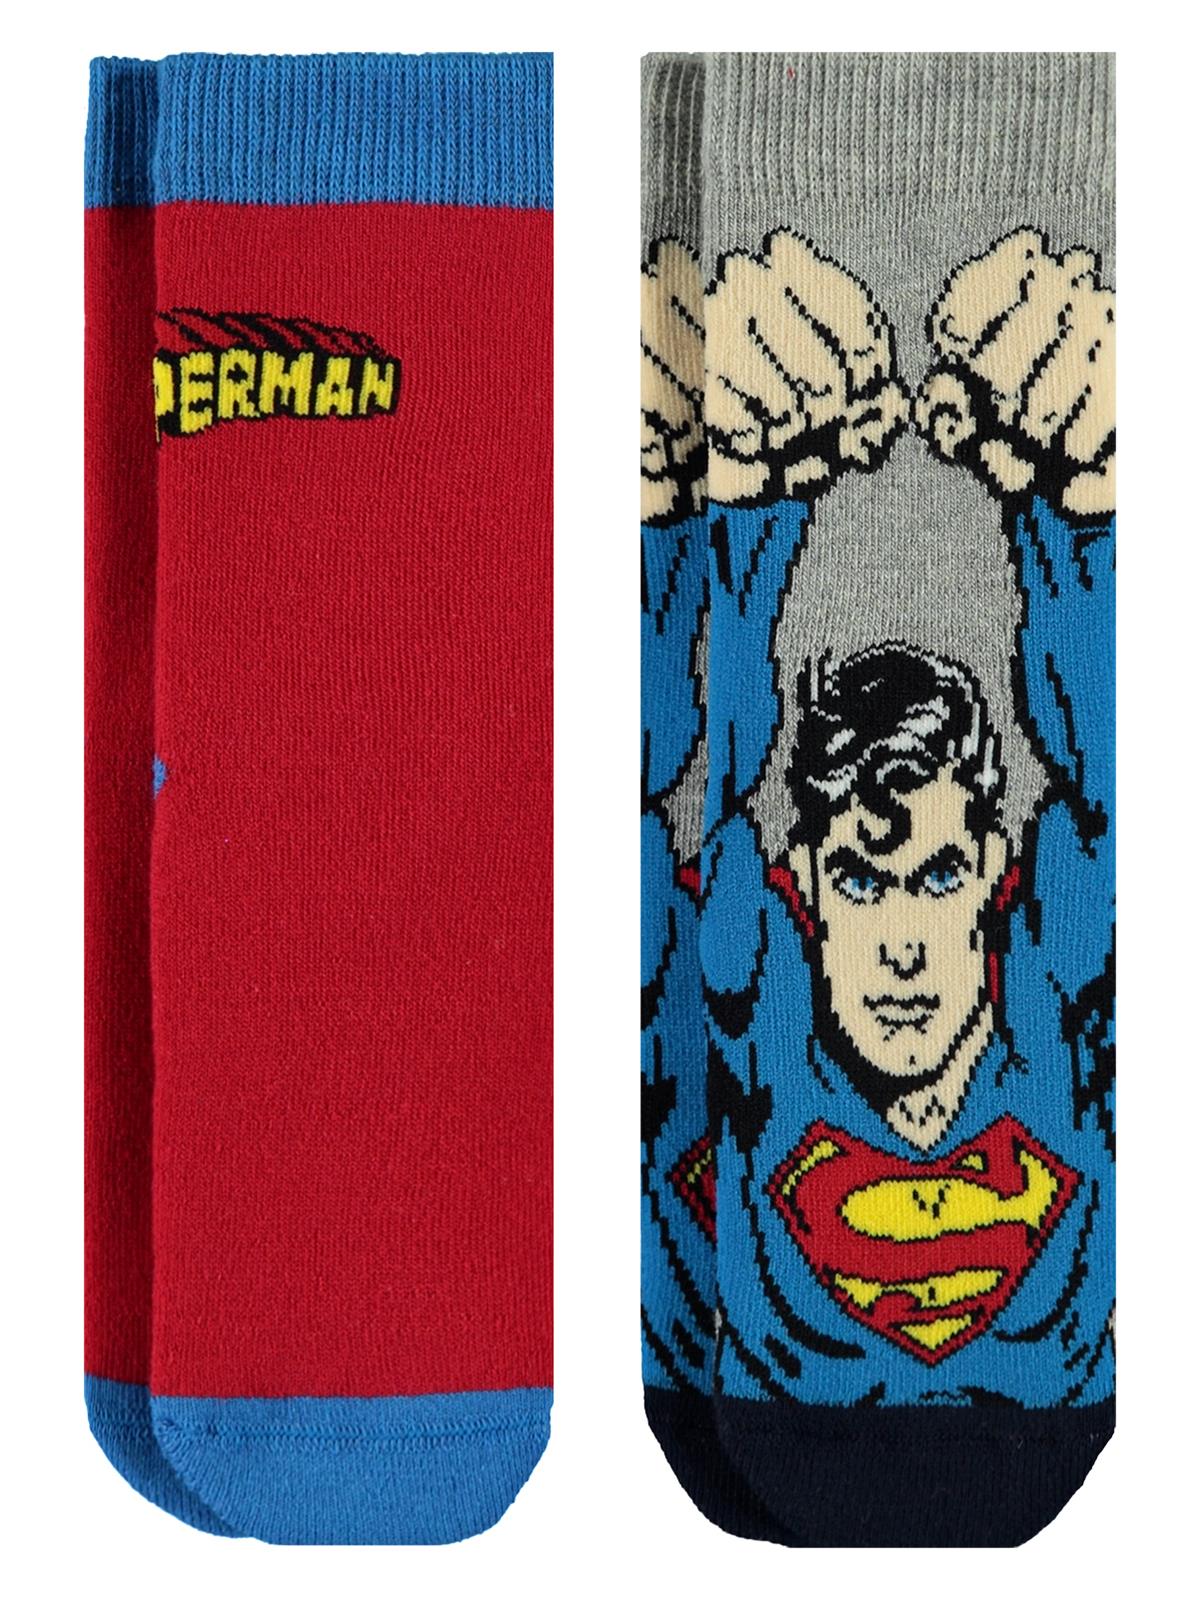 Superman Erkek Çocuk 2'li Çorap 3-11 Yaş Gri